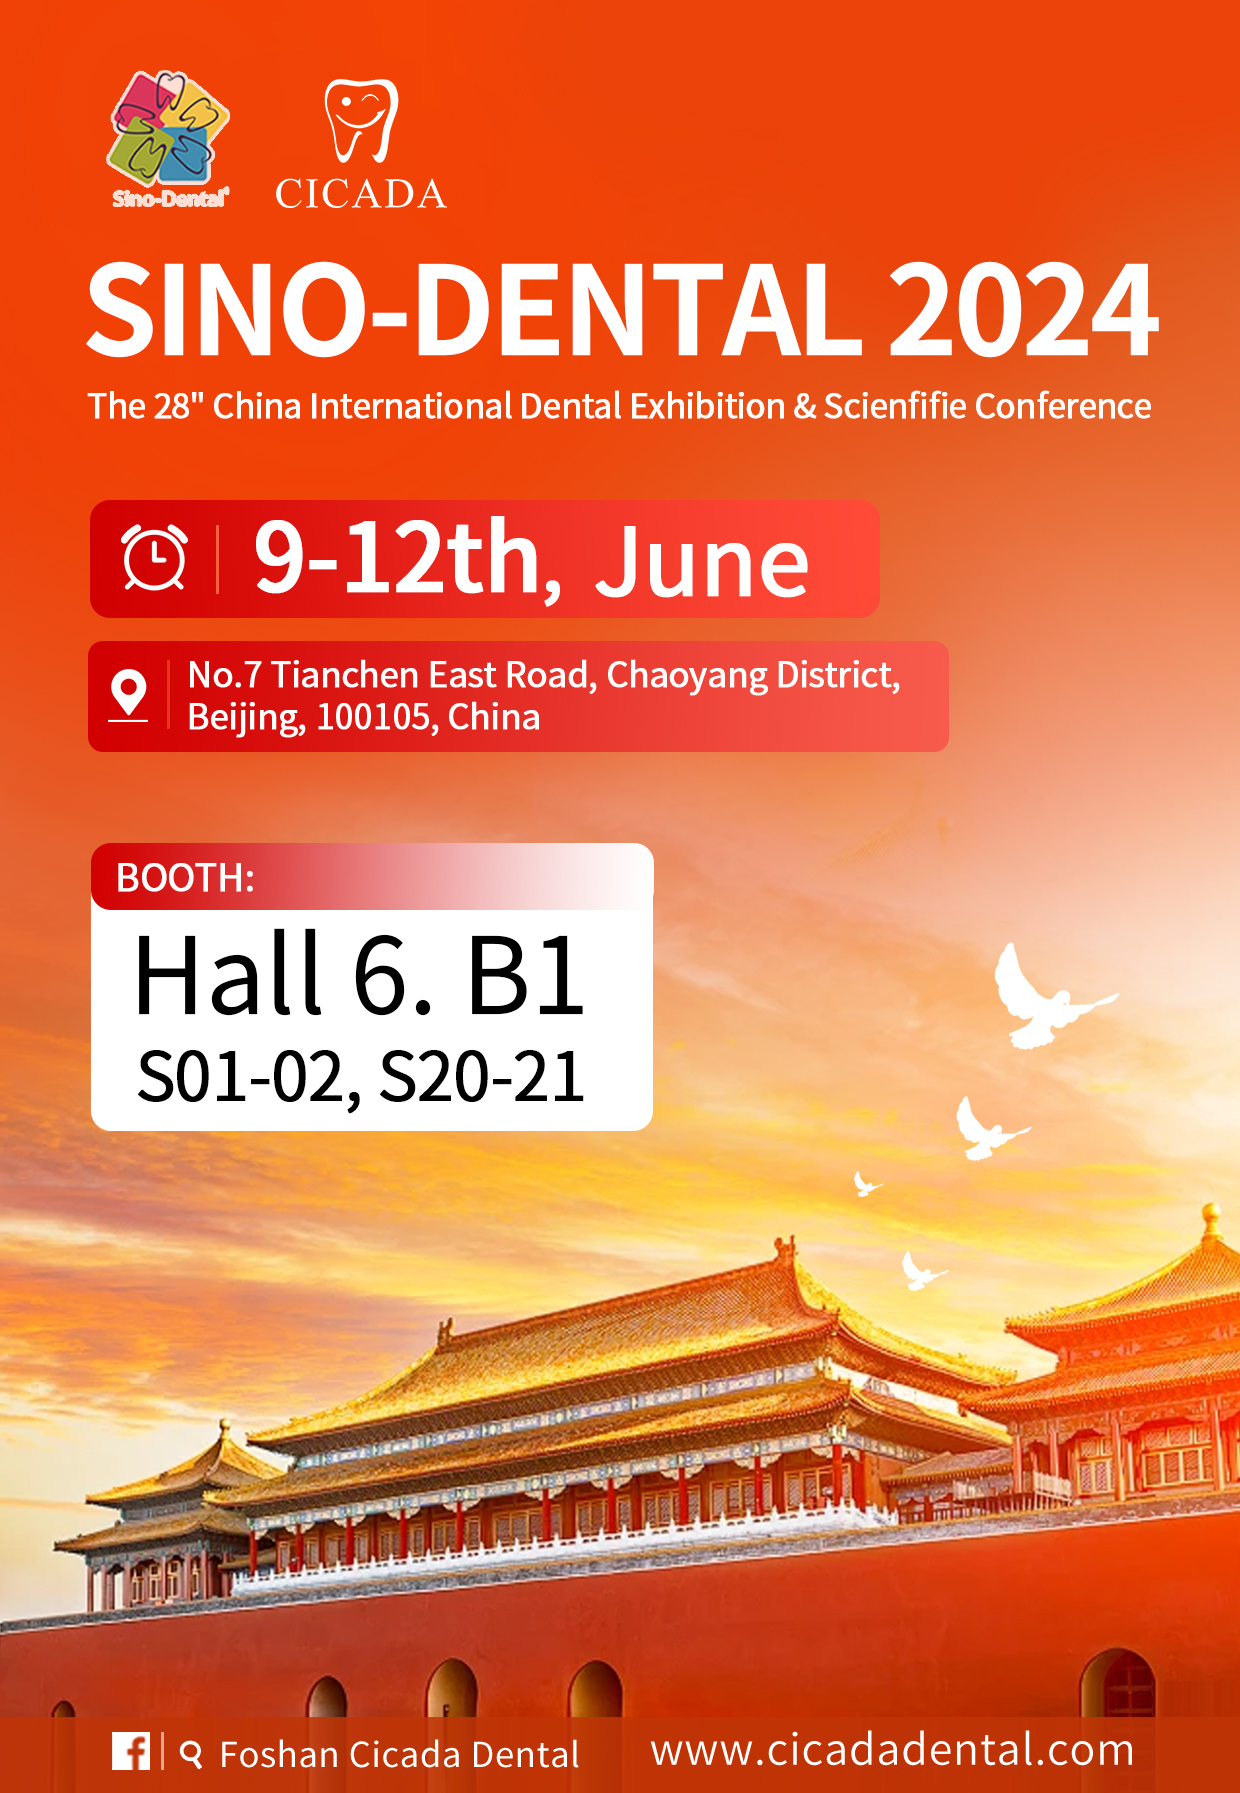 CICADA Dental to Showcase Quality Products at Sino-Dental 2024